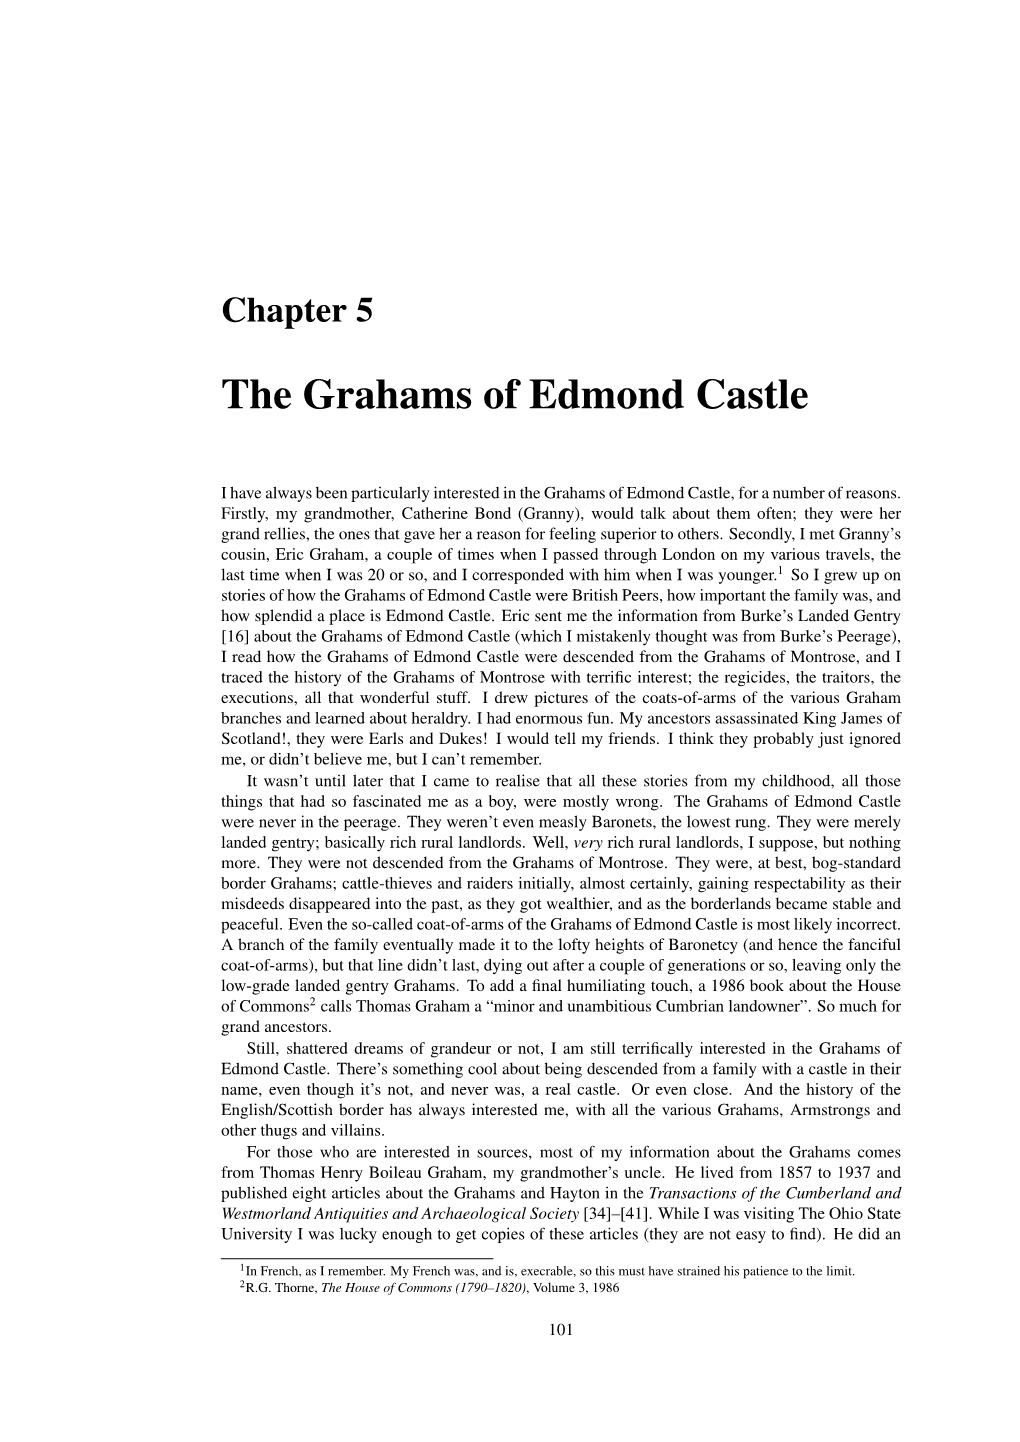 The Grahams of Edmond Castle